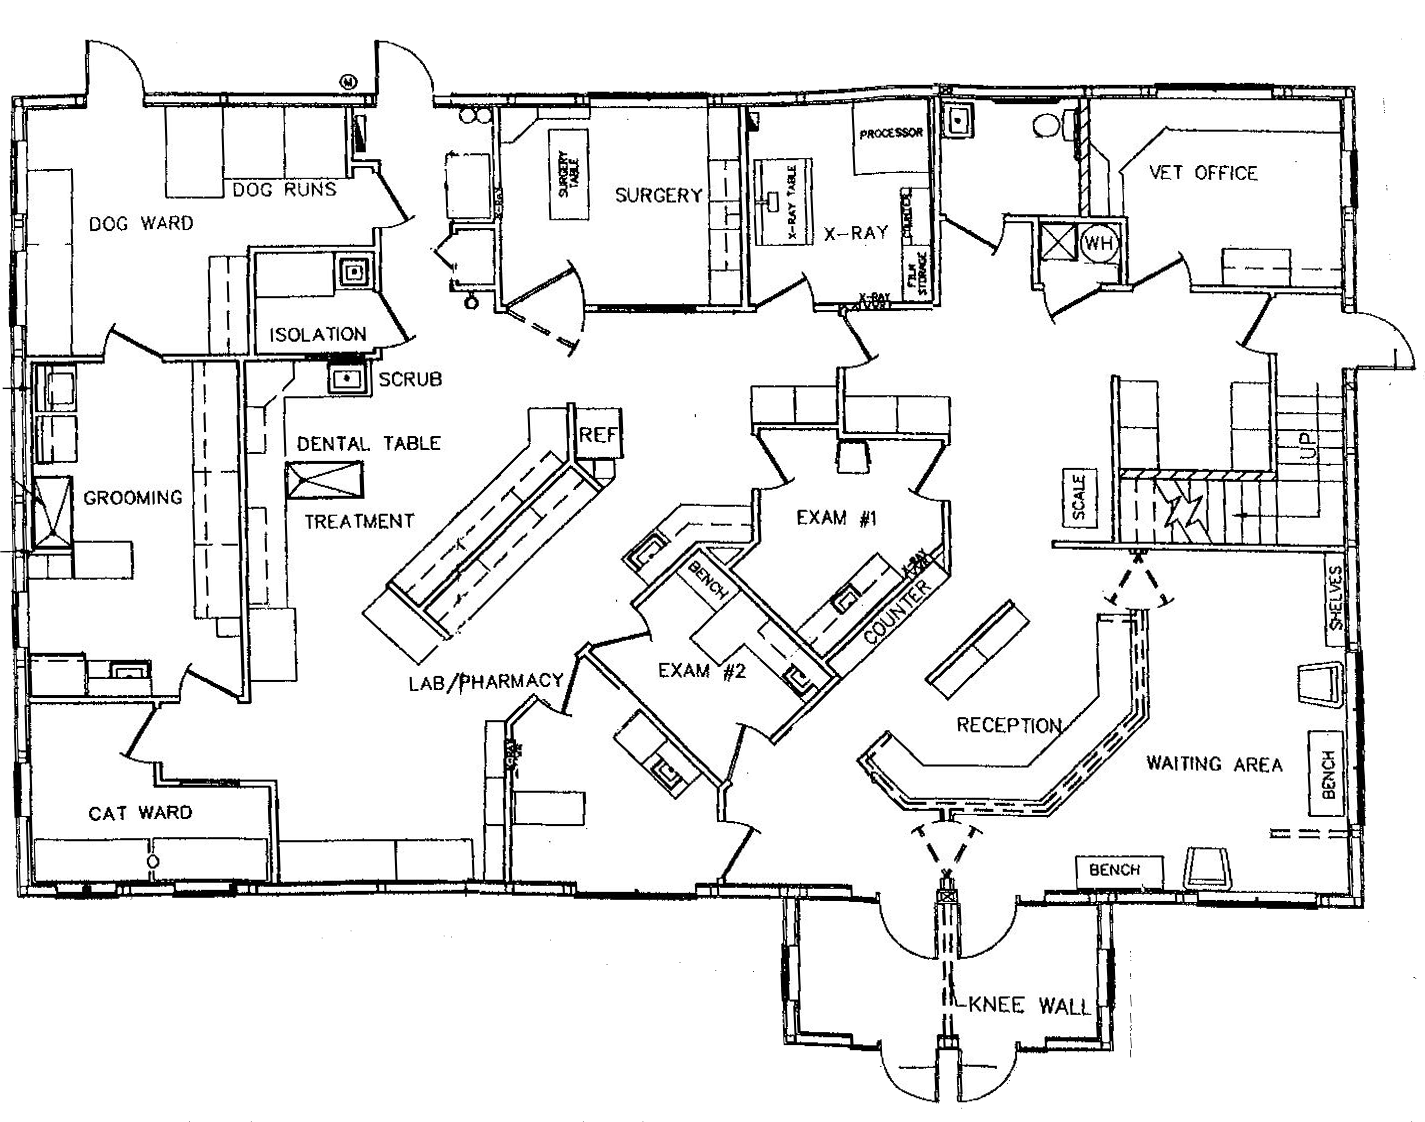 The Hospital Floor Plan